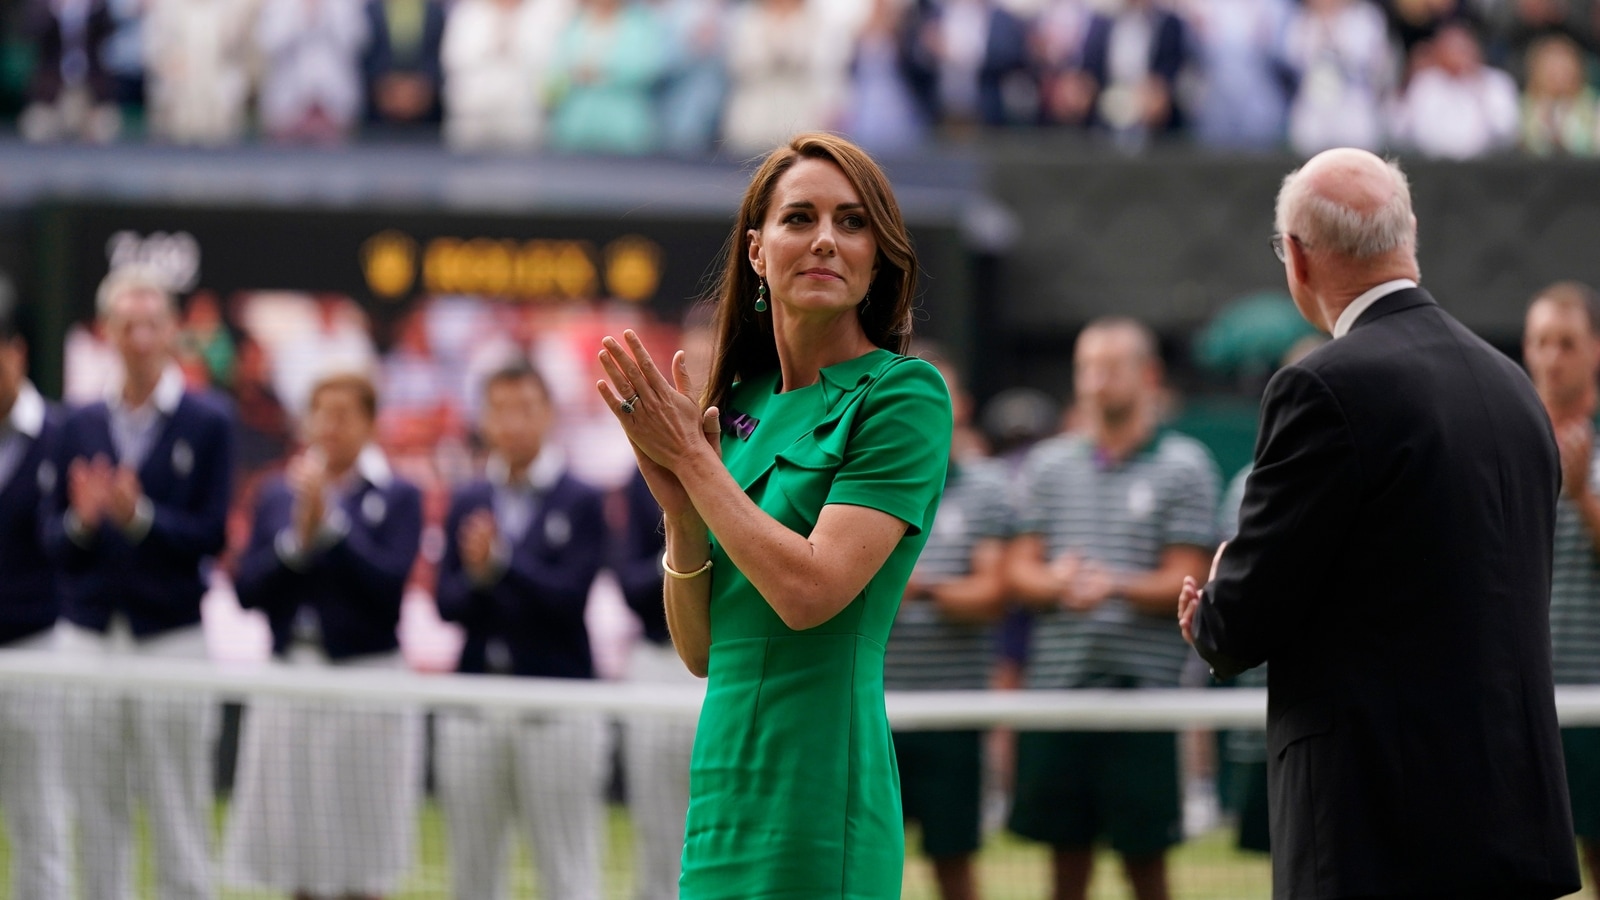 Kensington Palace confirms Kate Middleton’s Wimbledon final appearance amid cancer treatment